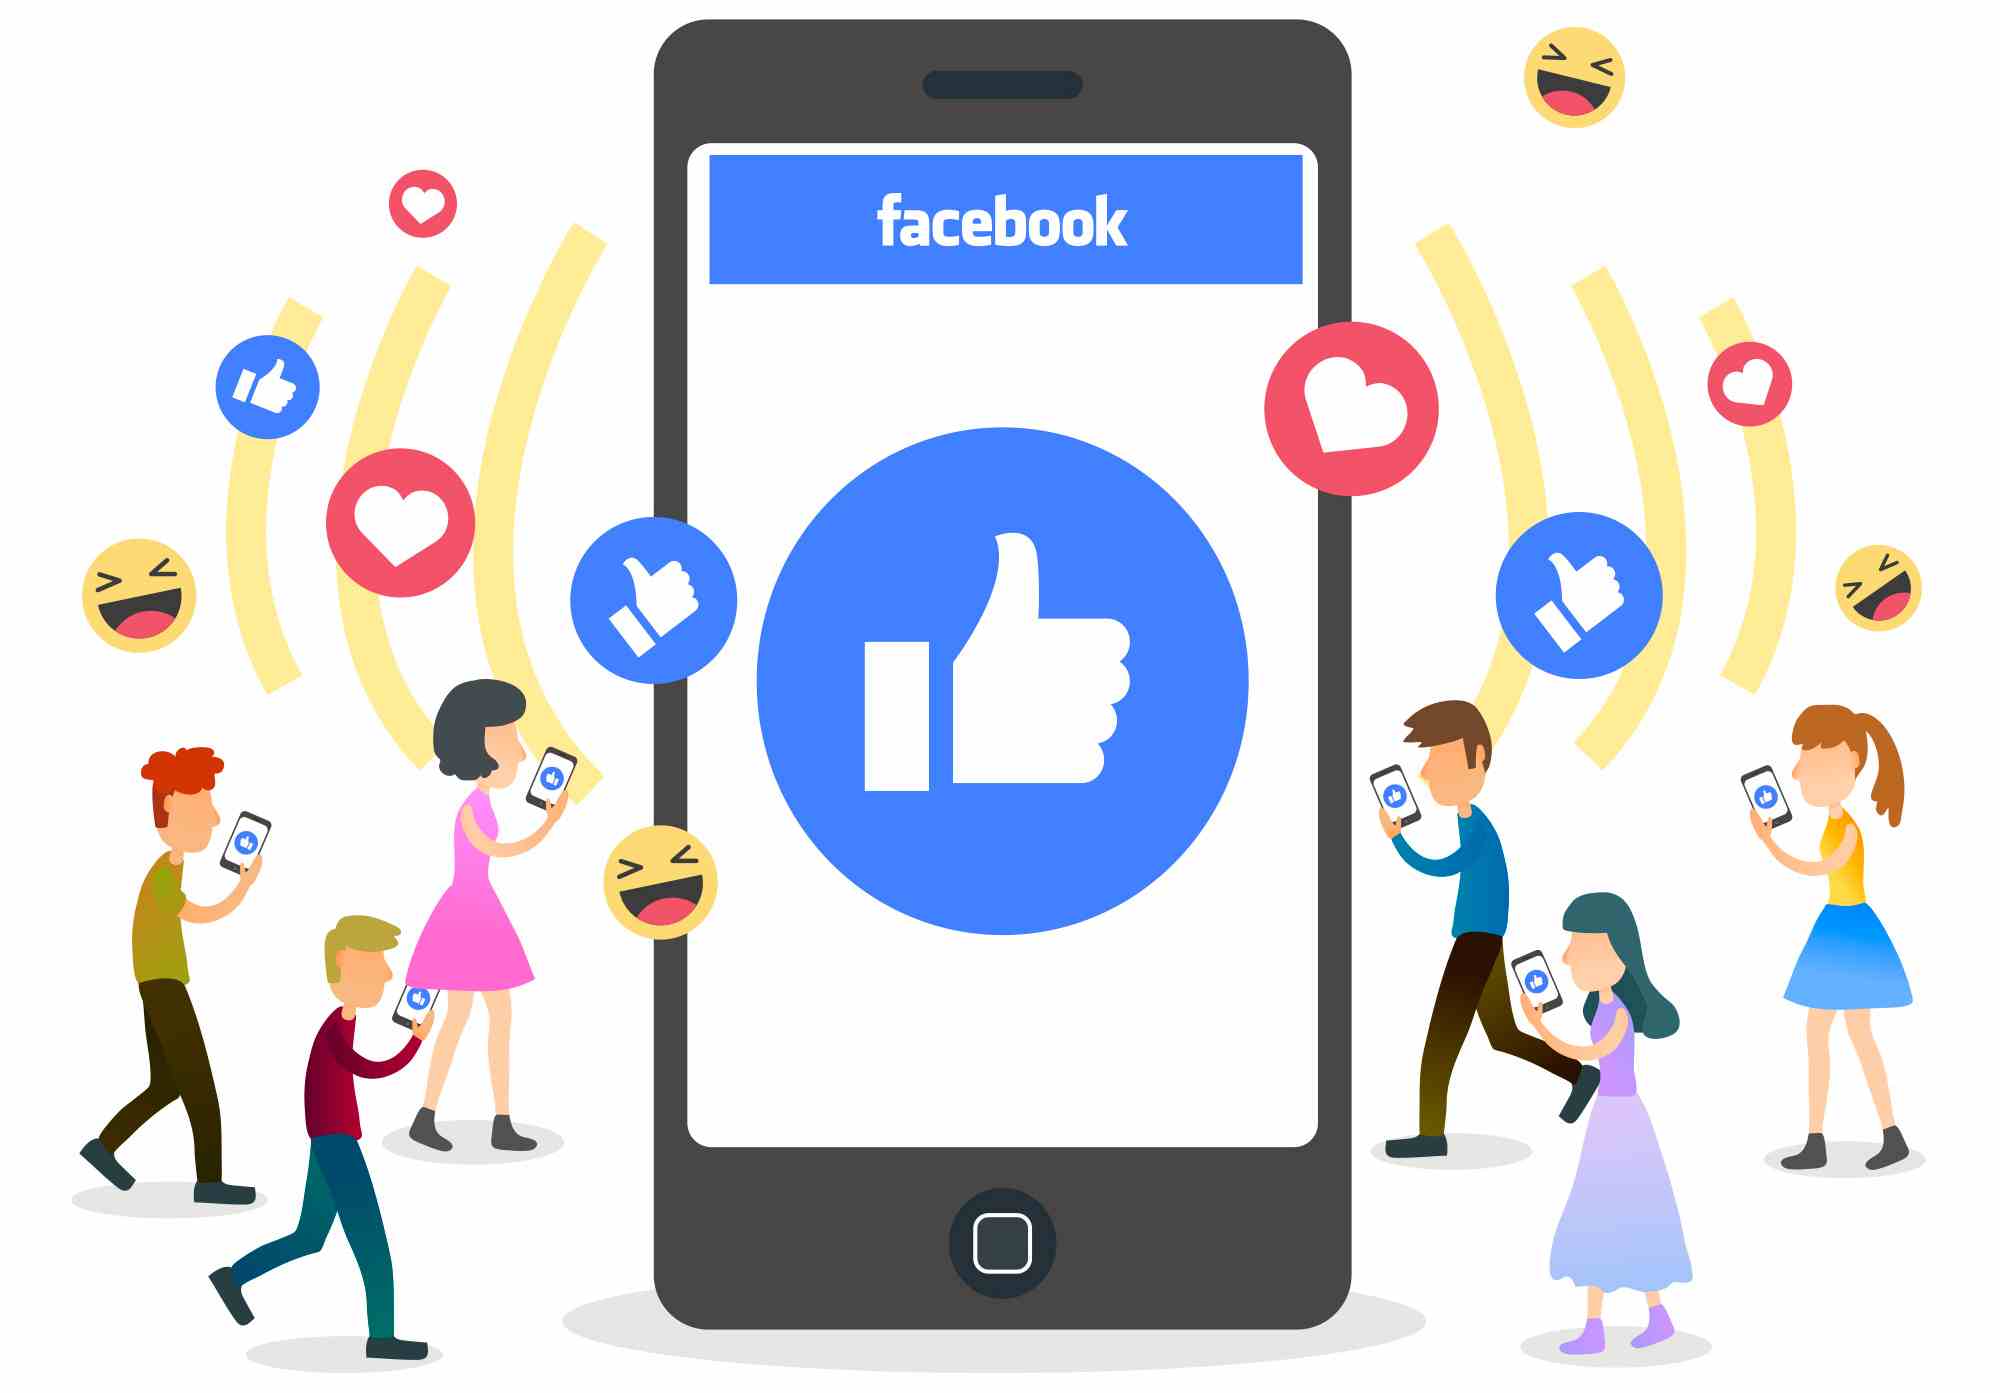 best facebook advertising services